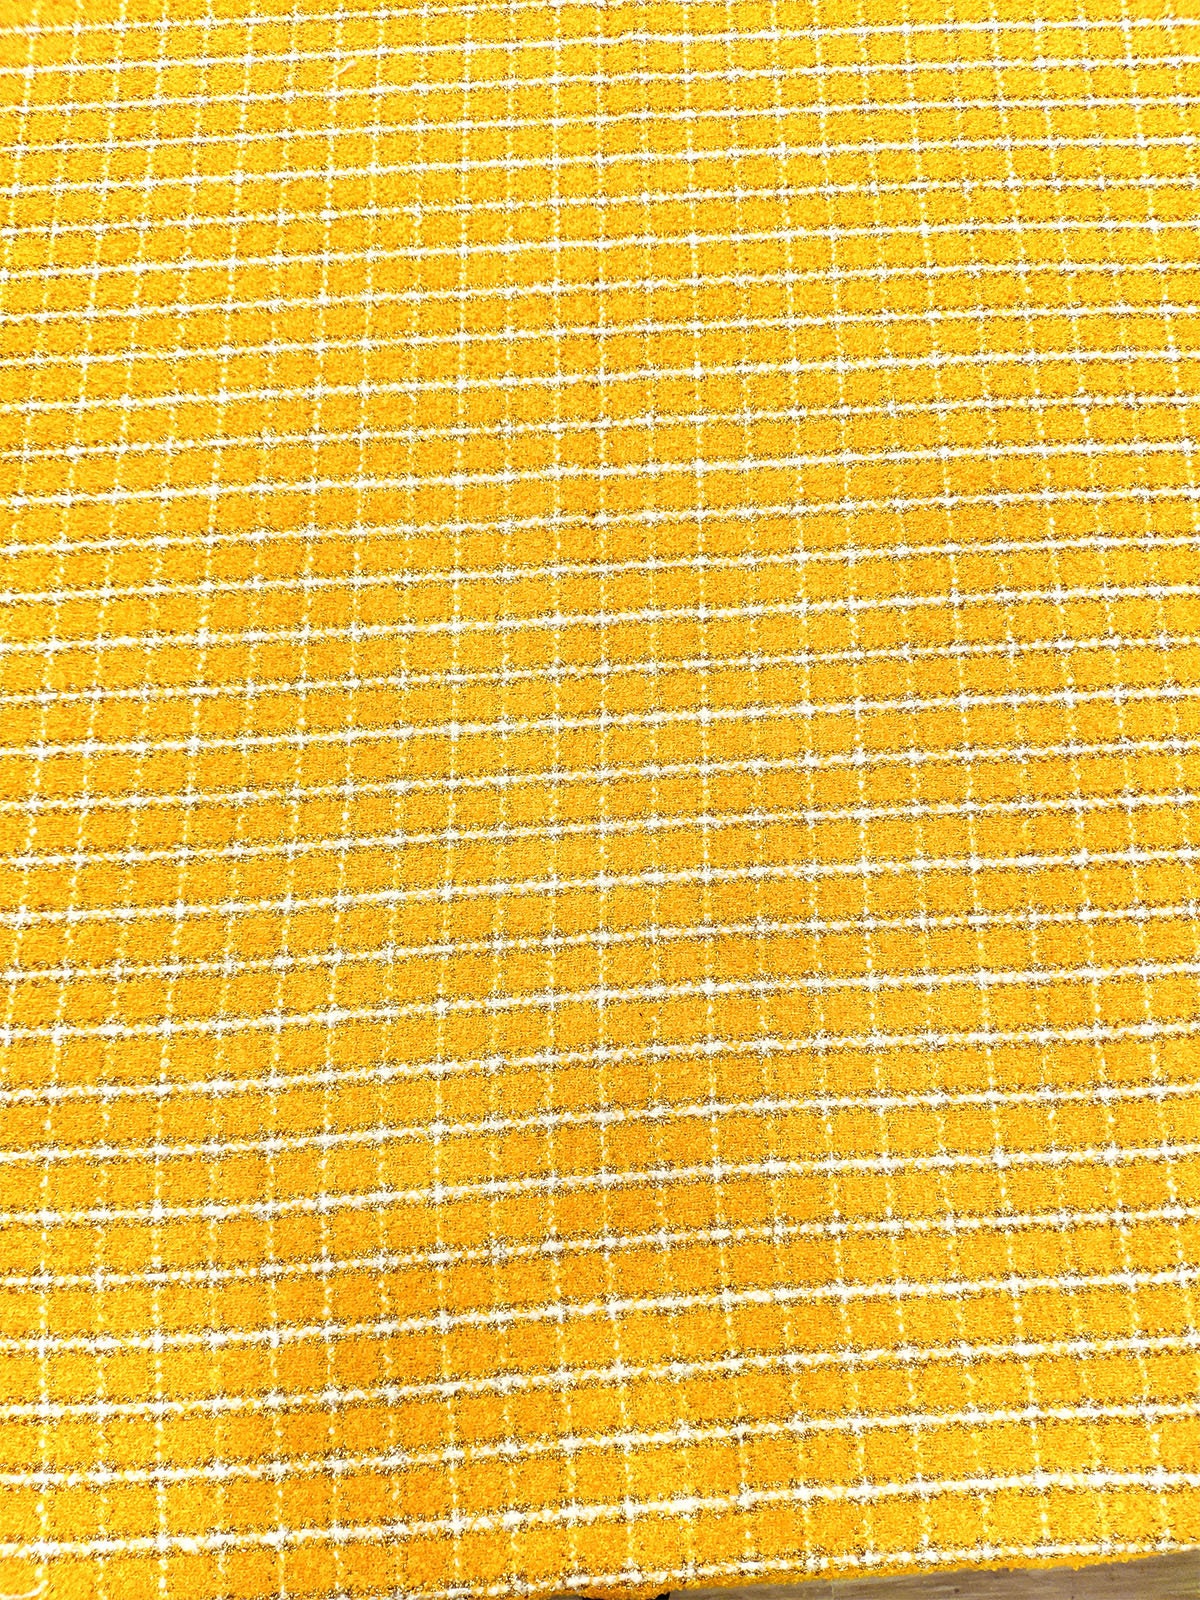 Yellow and Cream tweed fabric #99544 Free shipping